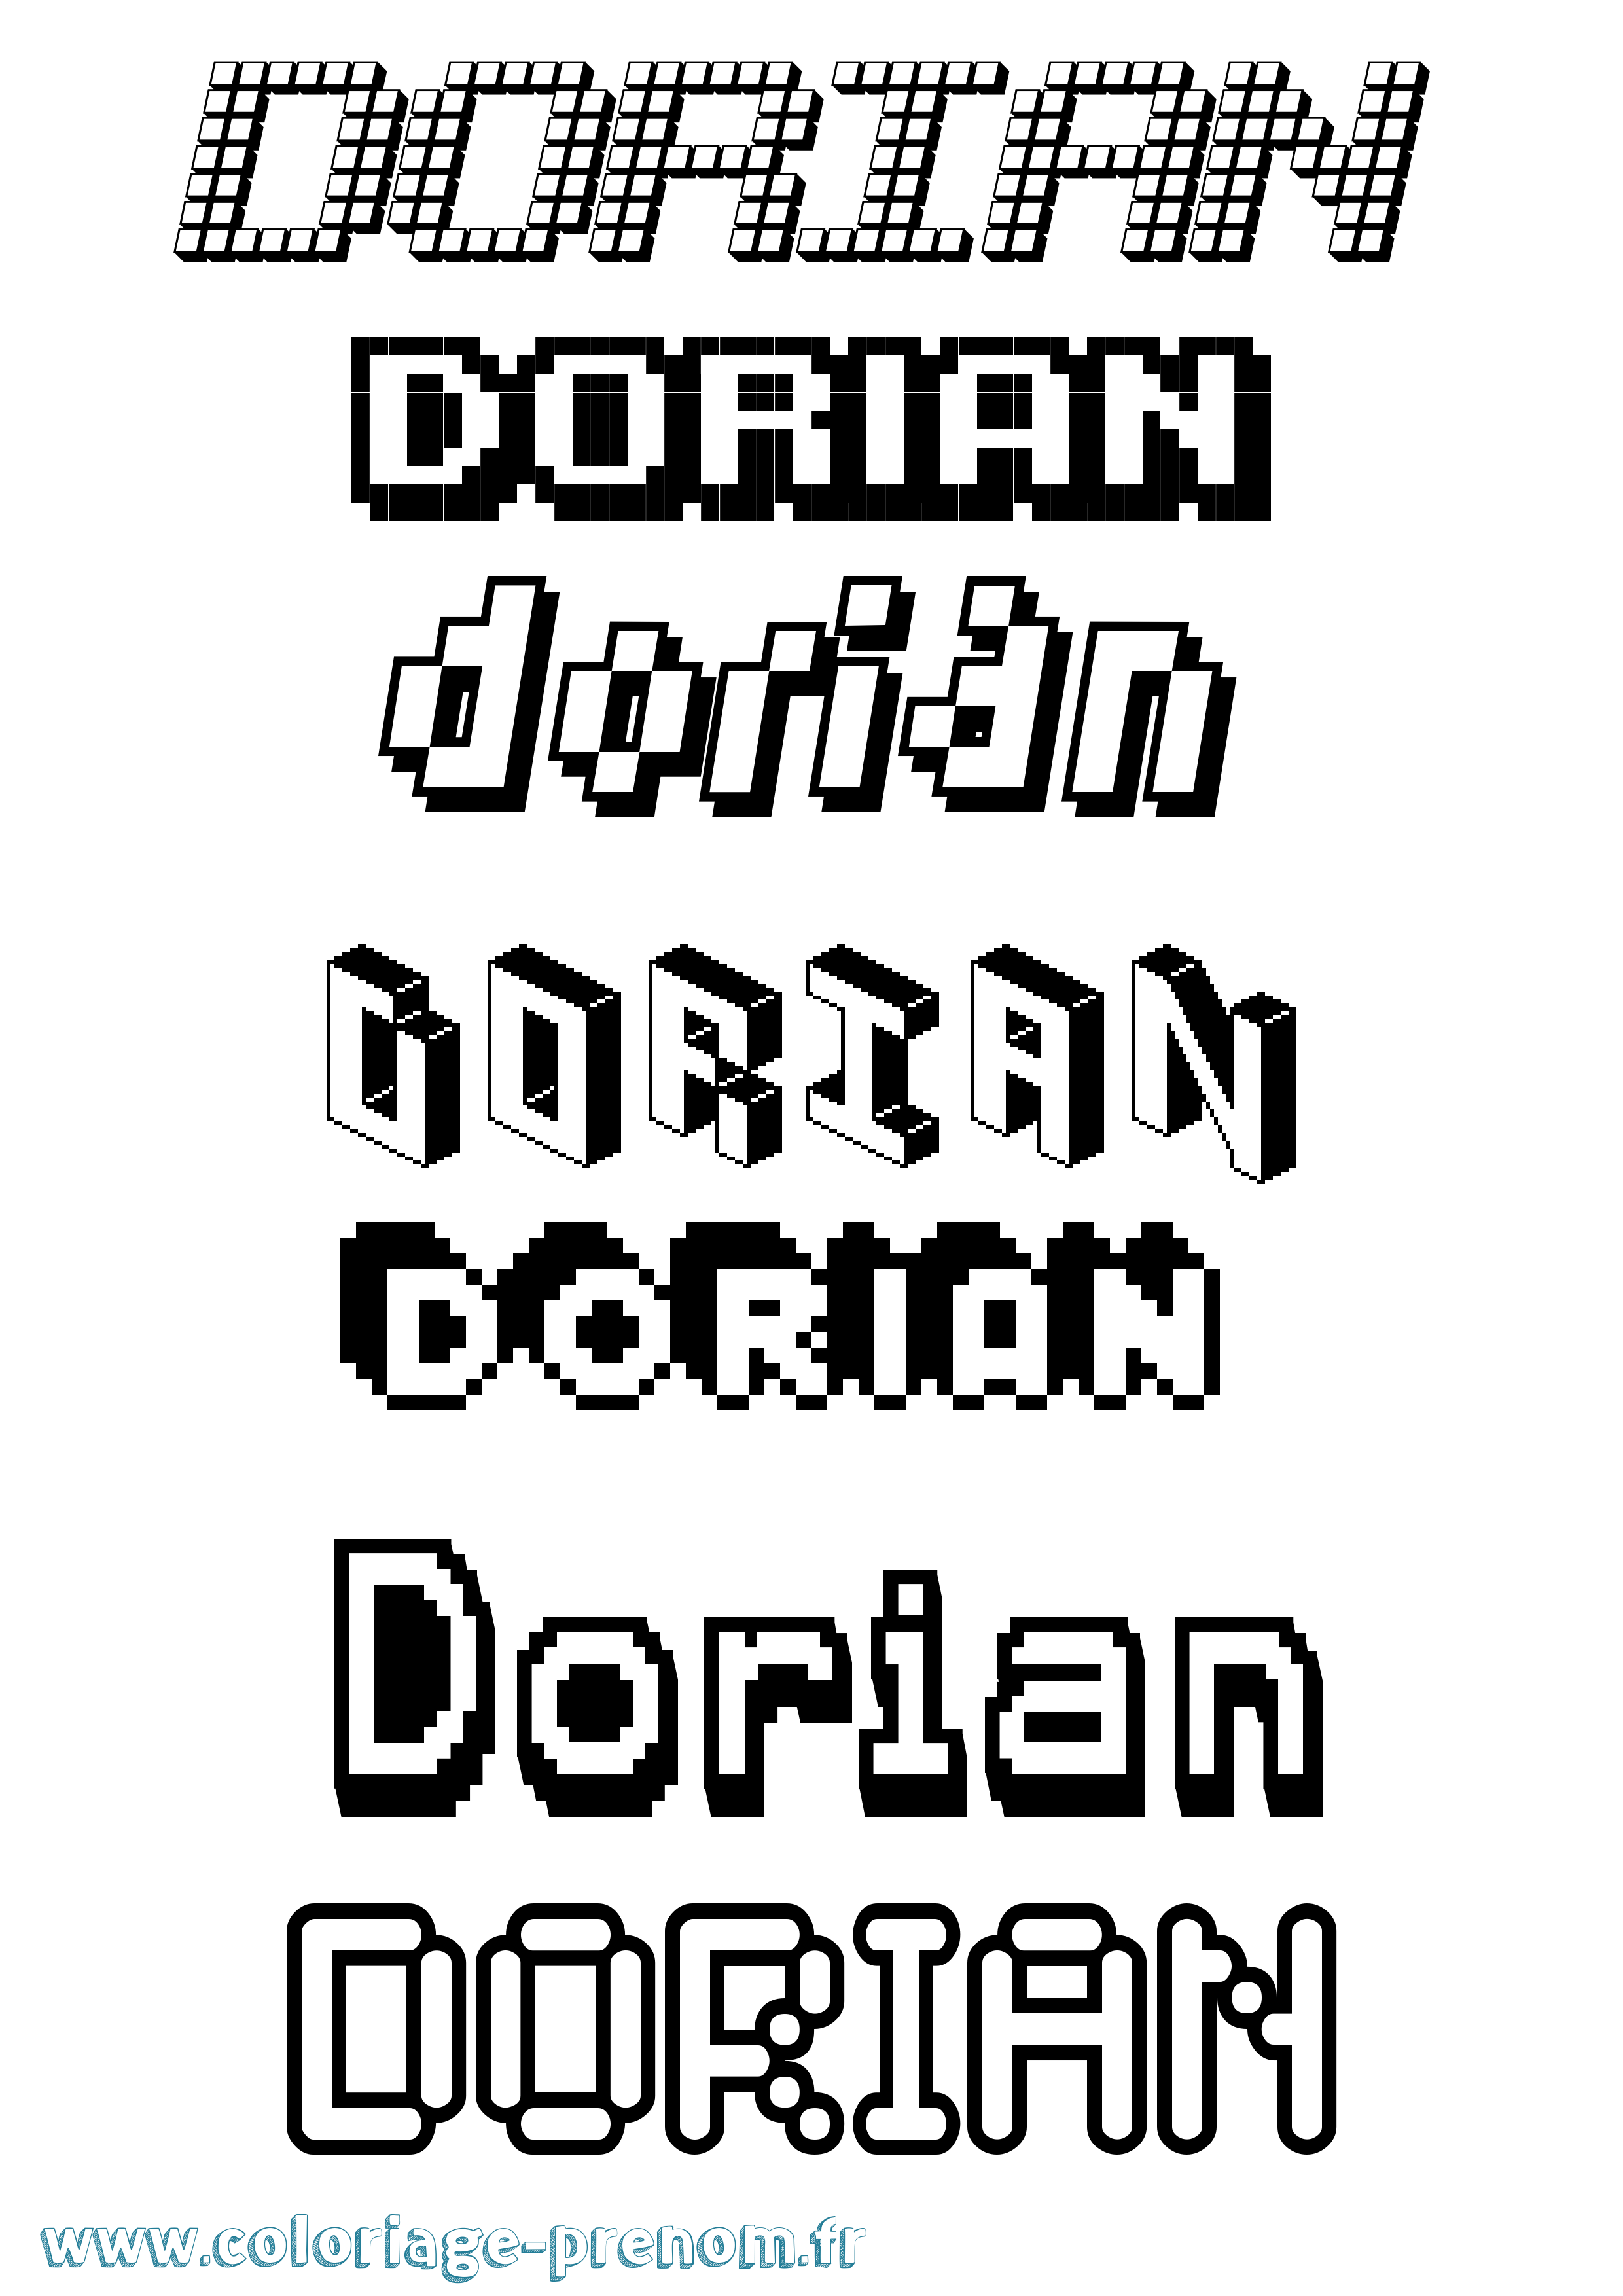 Coloriage prénom Dorian Pixel